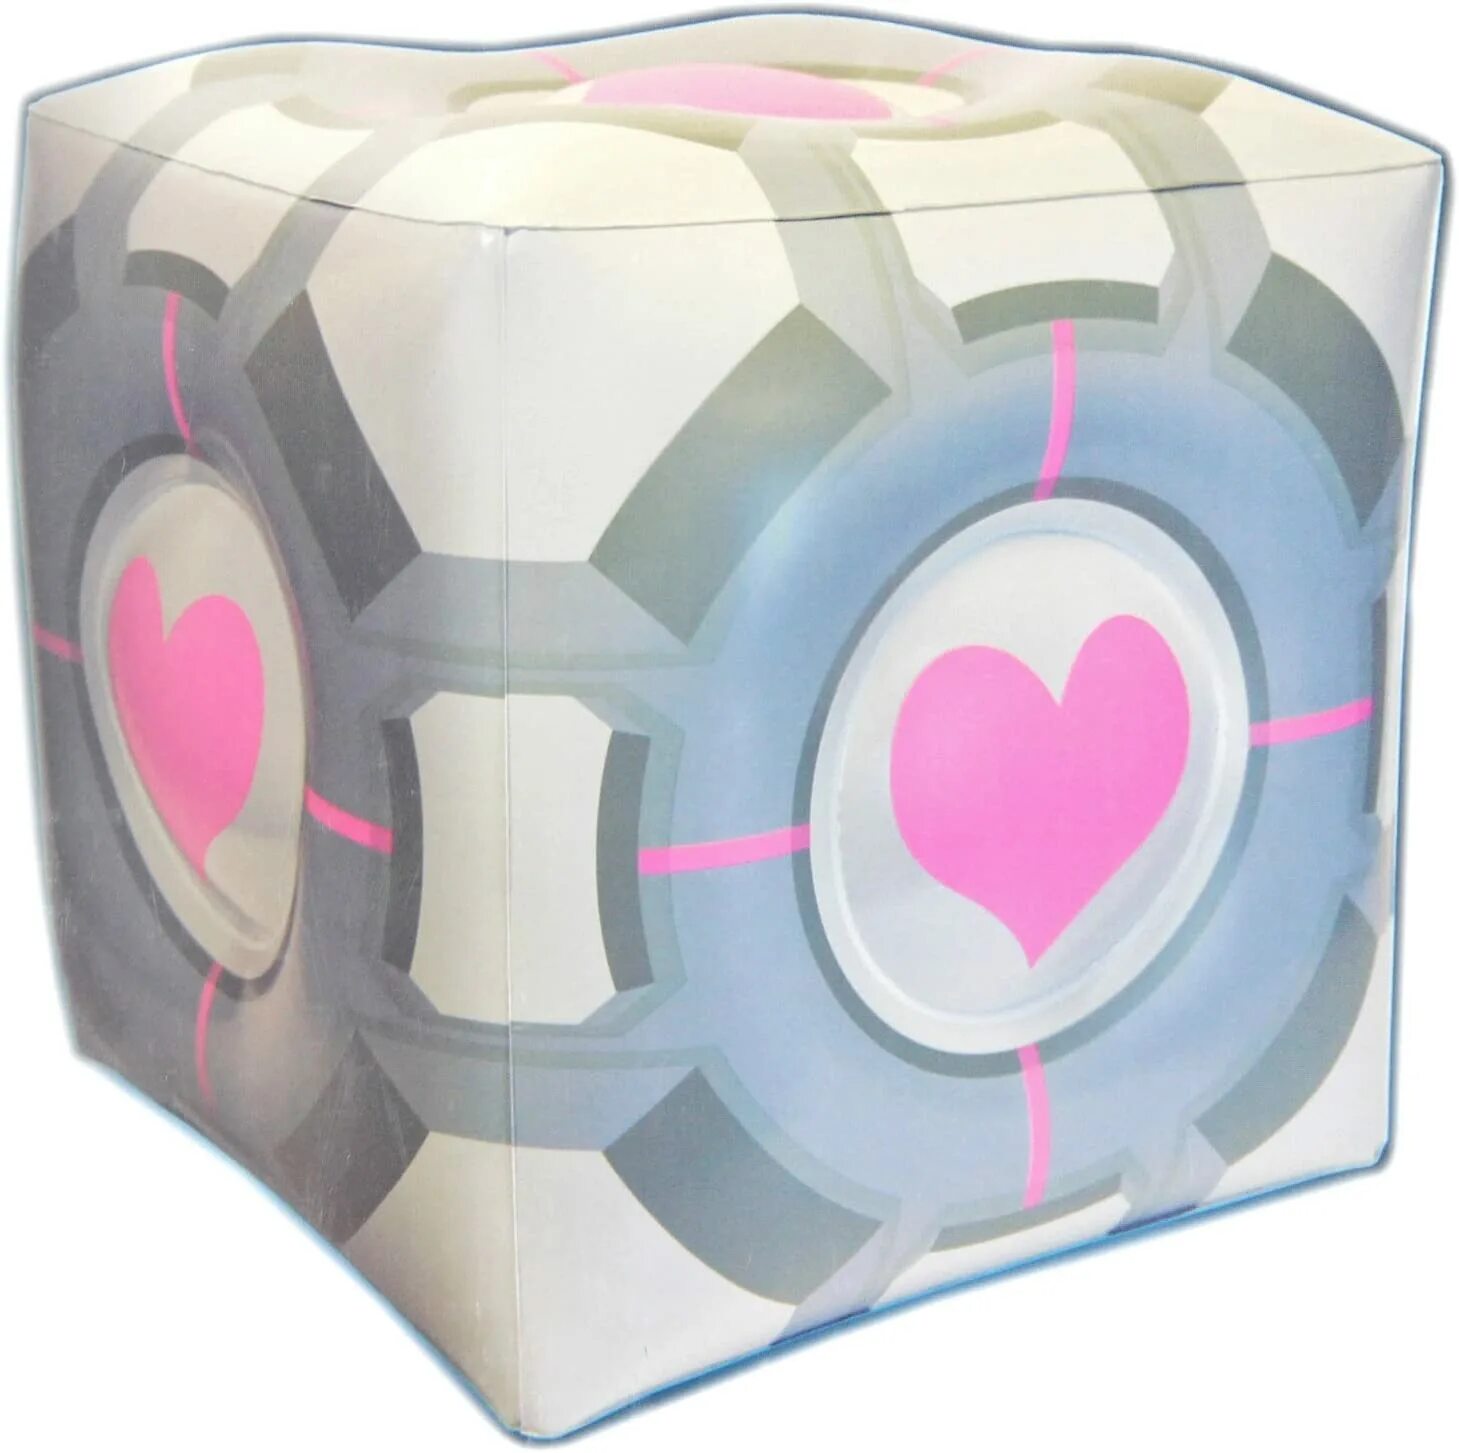 Portal cube. Portal 2 Cube Companion. Portal 2 куб. Portal 2 мягкая игрушка куб компаньон. Куб компаньон подушка.